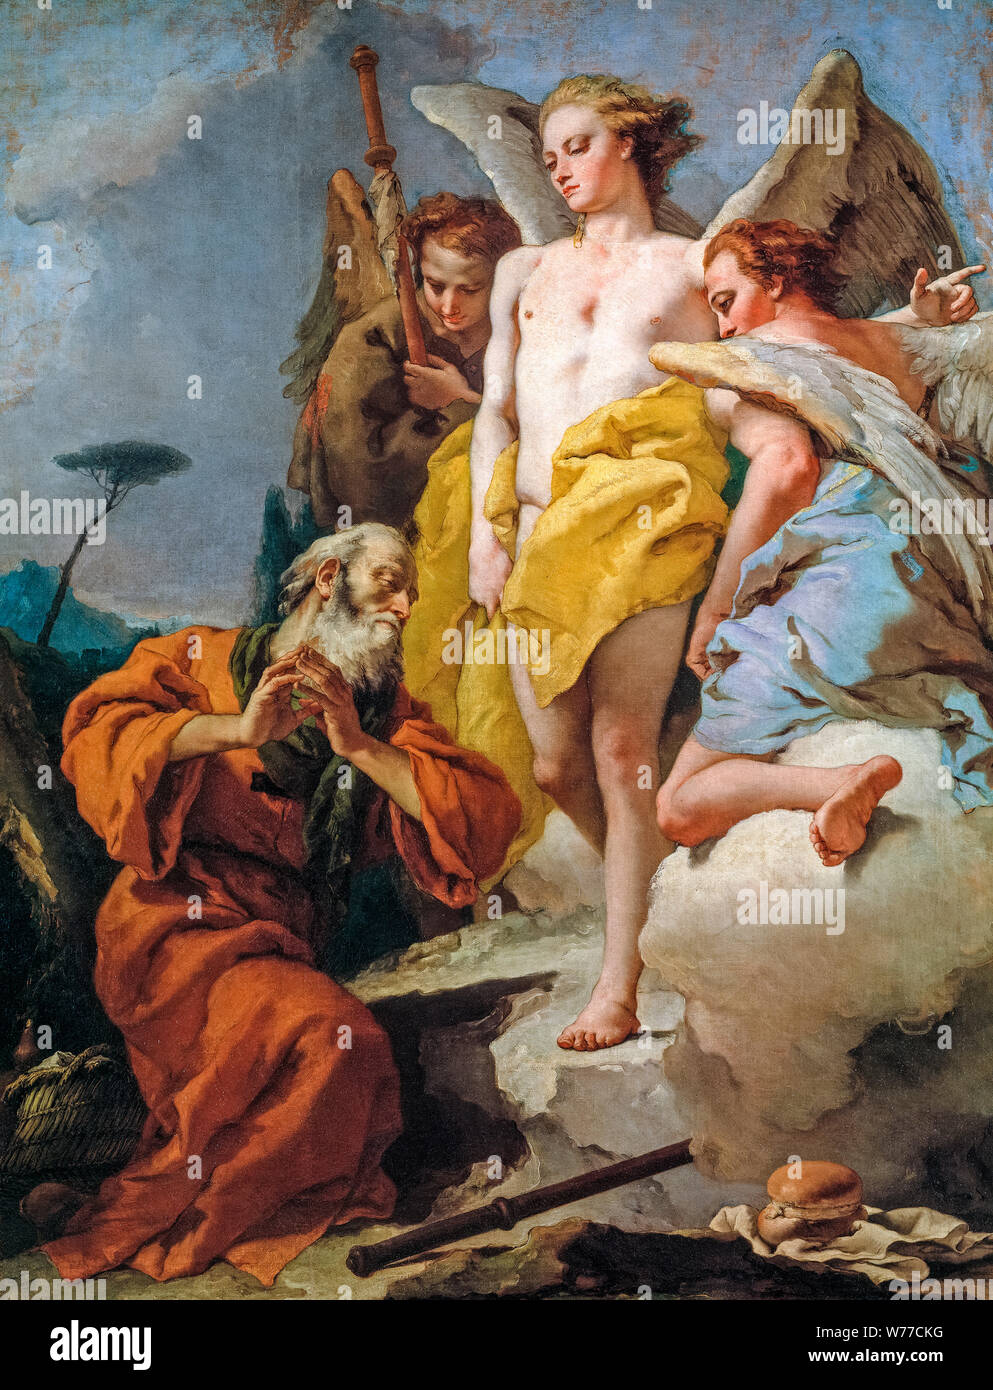 Giovanni Battista Tiepolo, painting, Abraham and the three Angels, 1730 Stock Photo